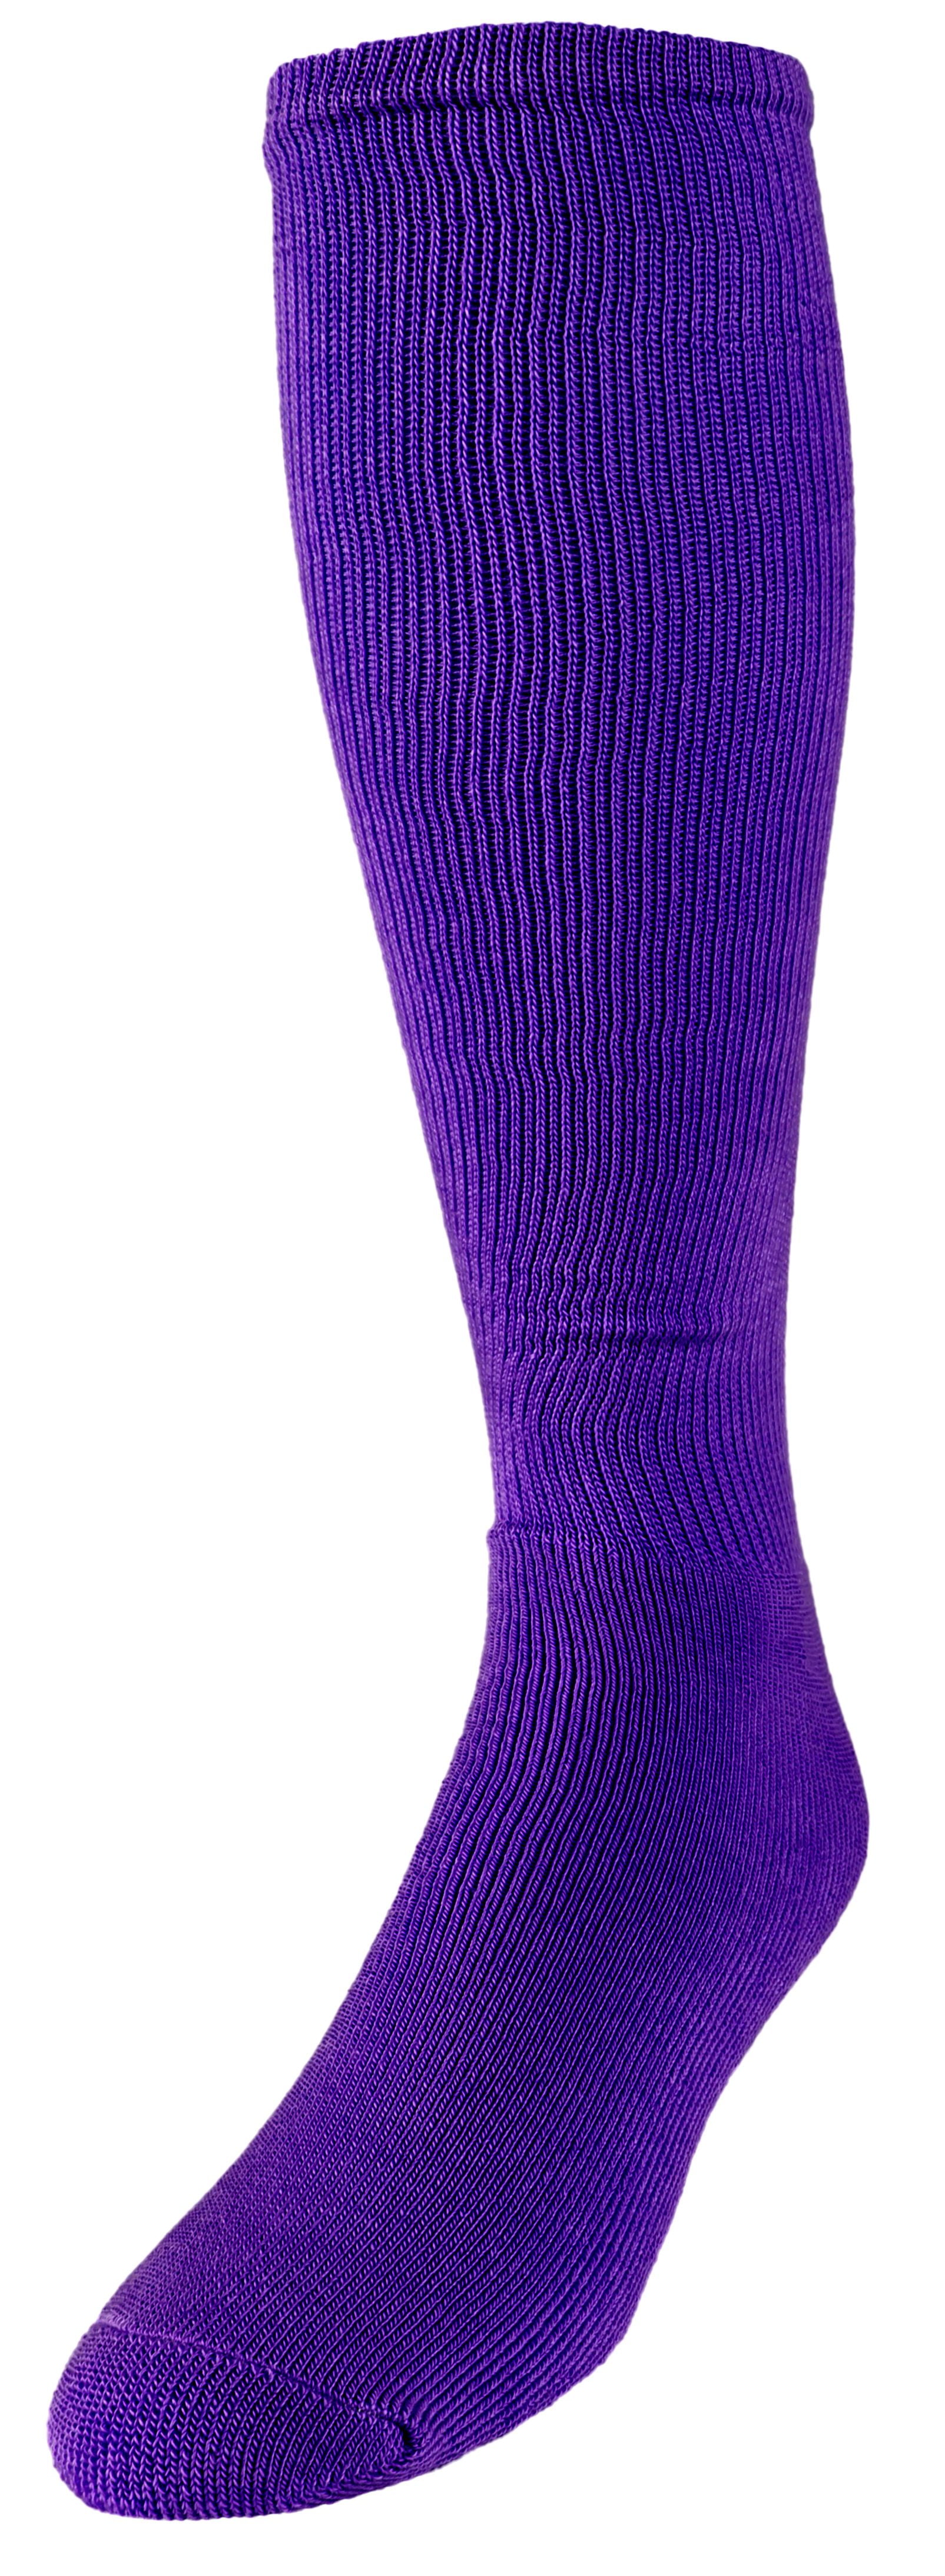 College Model NEW Reebok Soccer Socks Adult Large Purple 